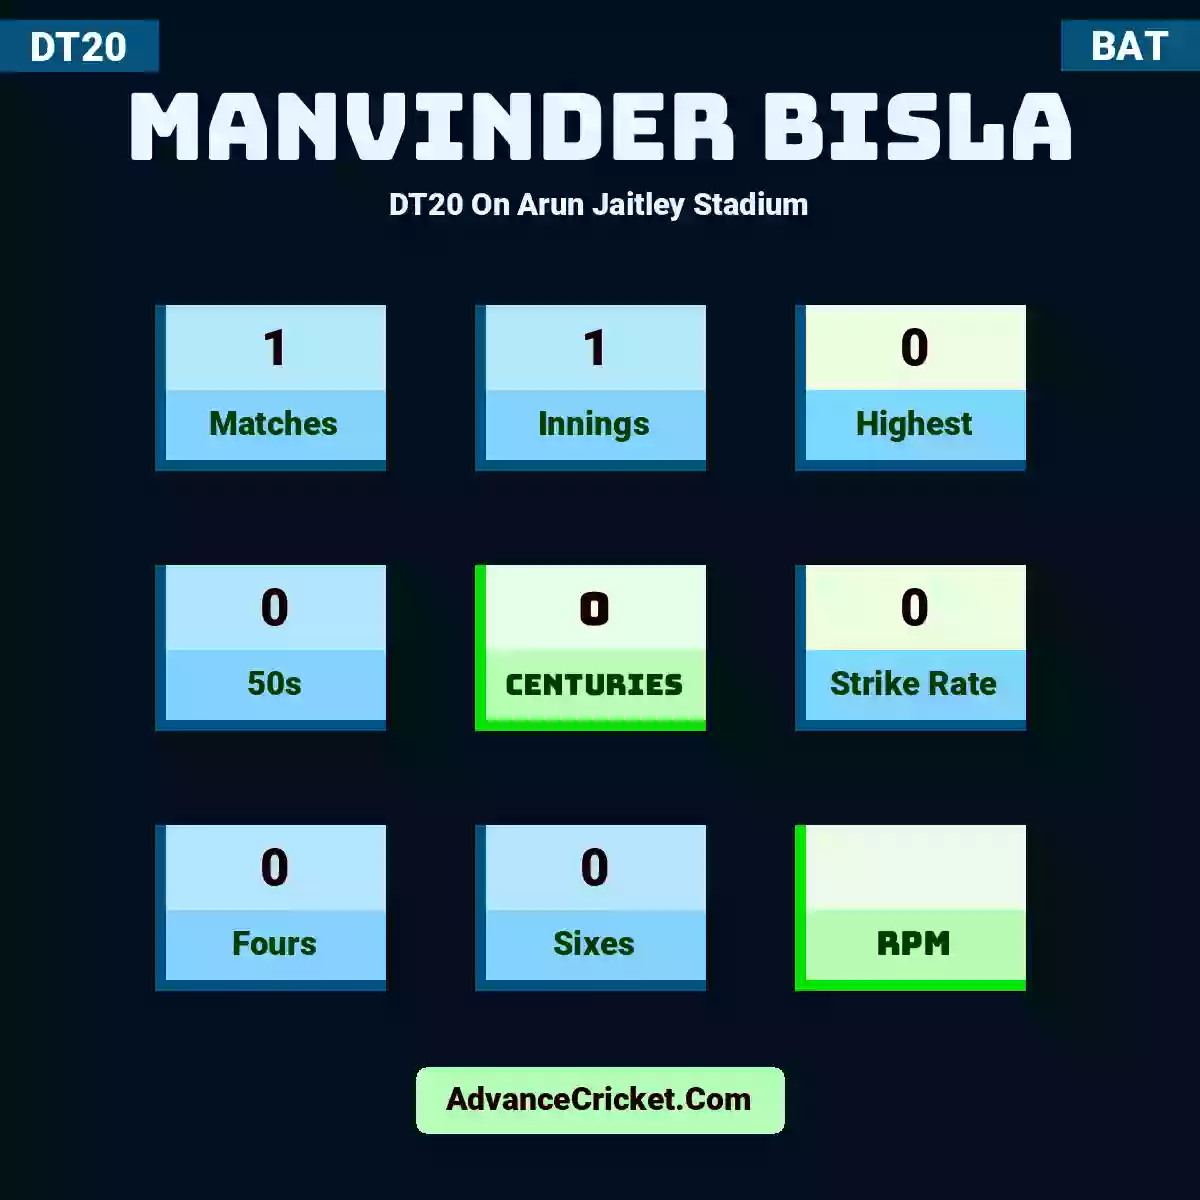 Manvinder Bisla DT20  On Arun Jaitley Stadium, Manvinder Bisla played 1 matches, scored 0 runs as highest, 0 half-centuries, and 0 centuries, with a strike rate of 0. M.Bisla hit 0 fours and 0 sixes.